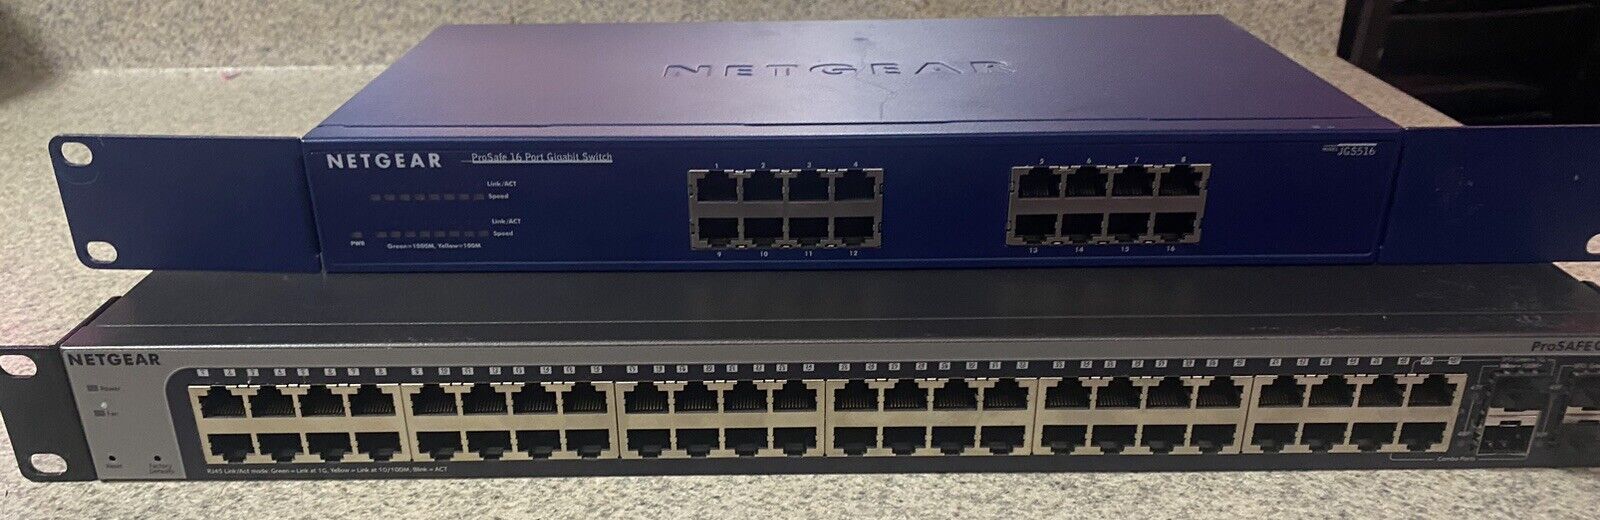 Lot 2 NETGEAR GS748T 48 Port Ethernet Switch -GS748T-500NAS+ Grade ETCNet2 DMX